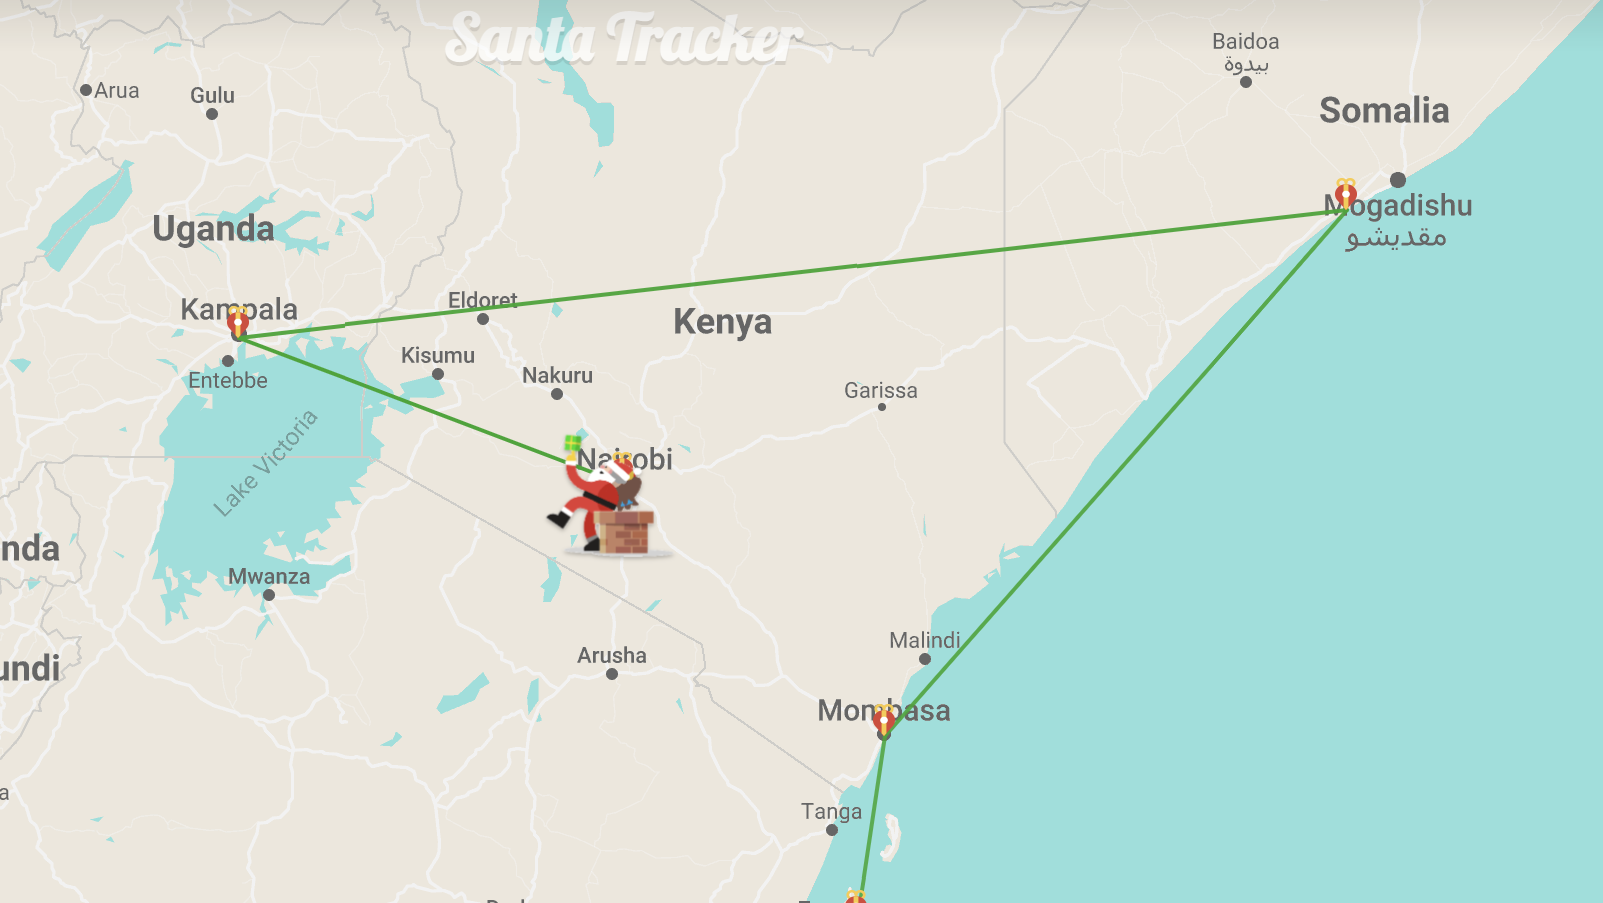 Santa Tracker over Kenya